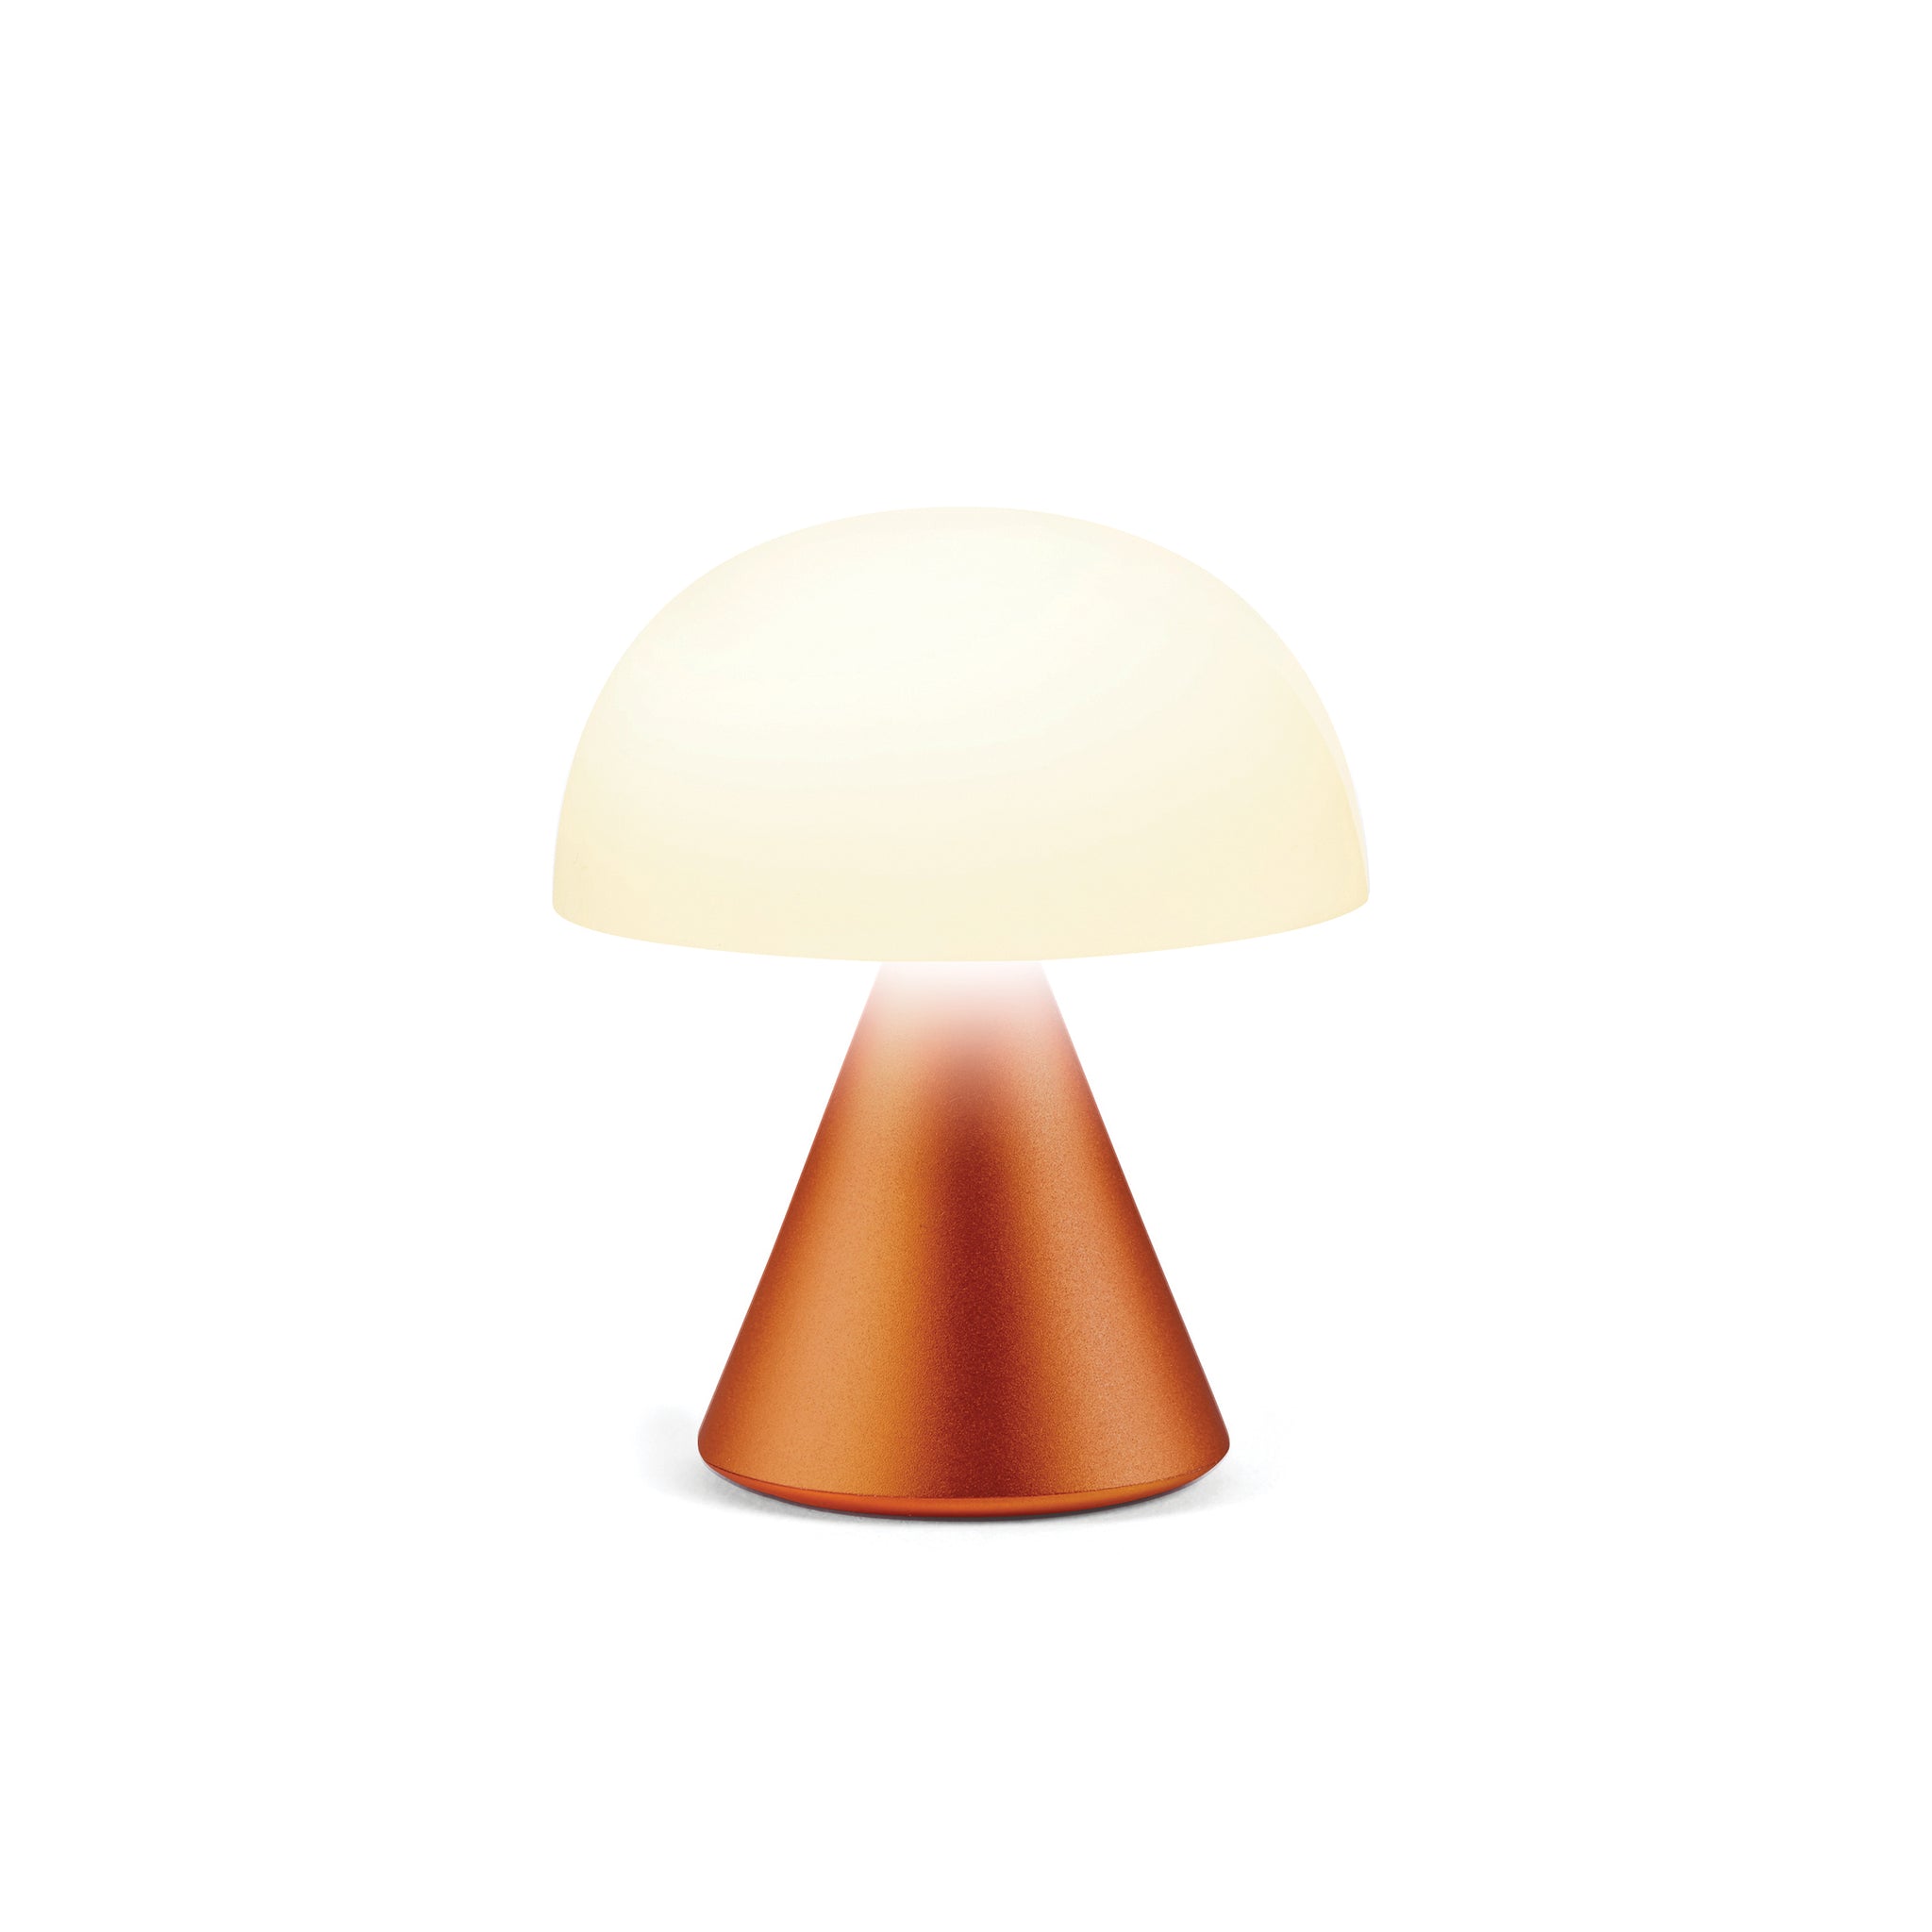 Lexon Mina Small Oranje│Oplaadbare LED-Lamp│art. LH60O1│vooraanzicht met warm licht aan